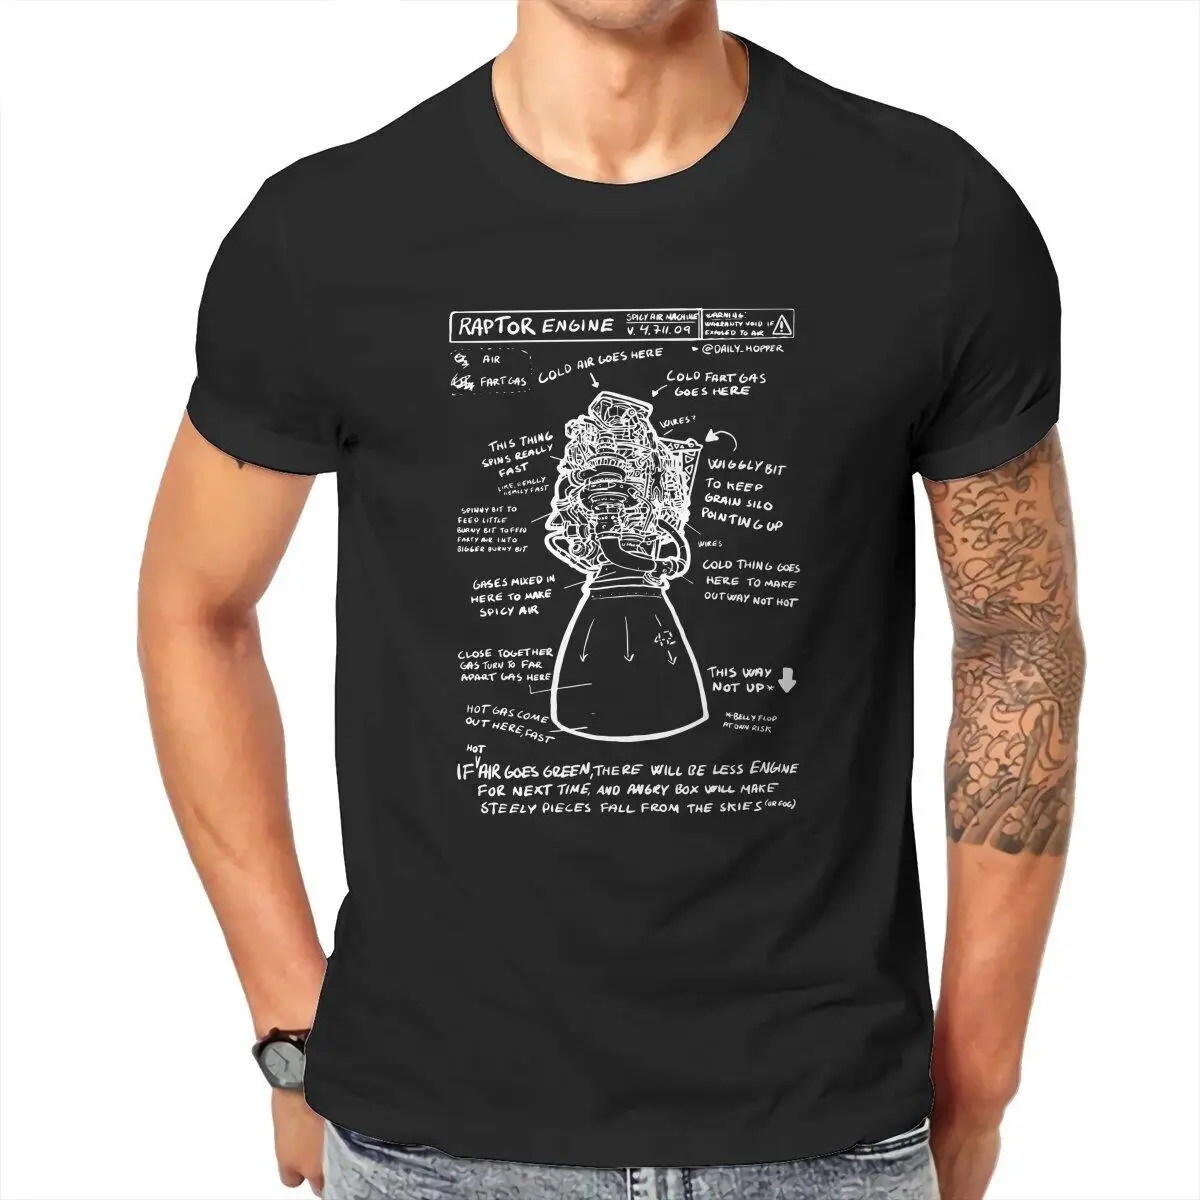 SpaceX Raptor Schematics spicy Air Machine  Men T Shirts  Fun Tee Shirt Short Sleeve Crewneck T-Shirt 100% Cotton 6XL Clothes